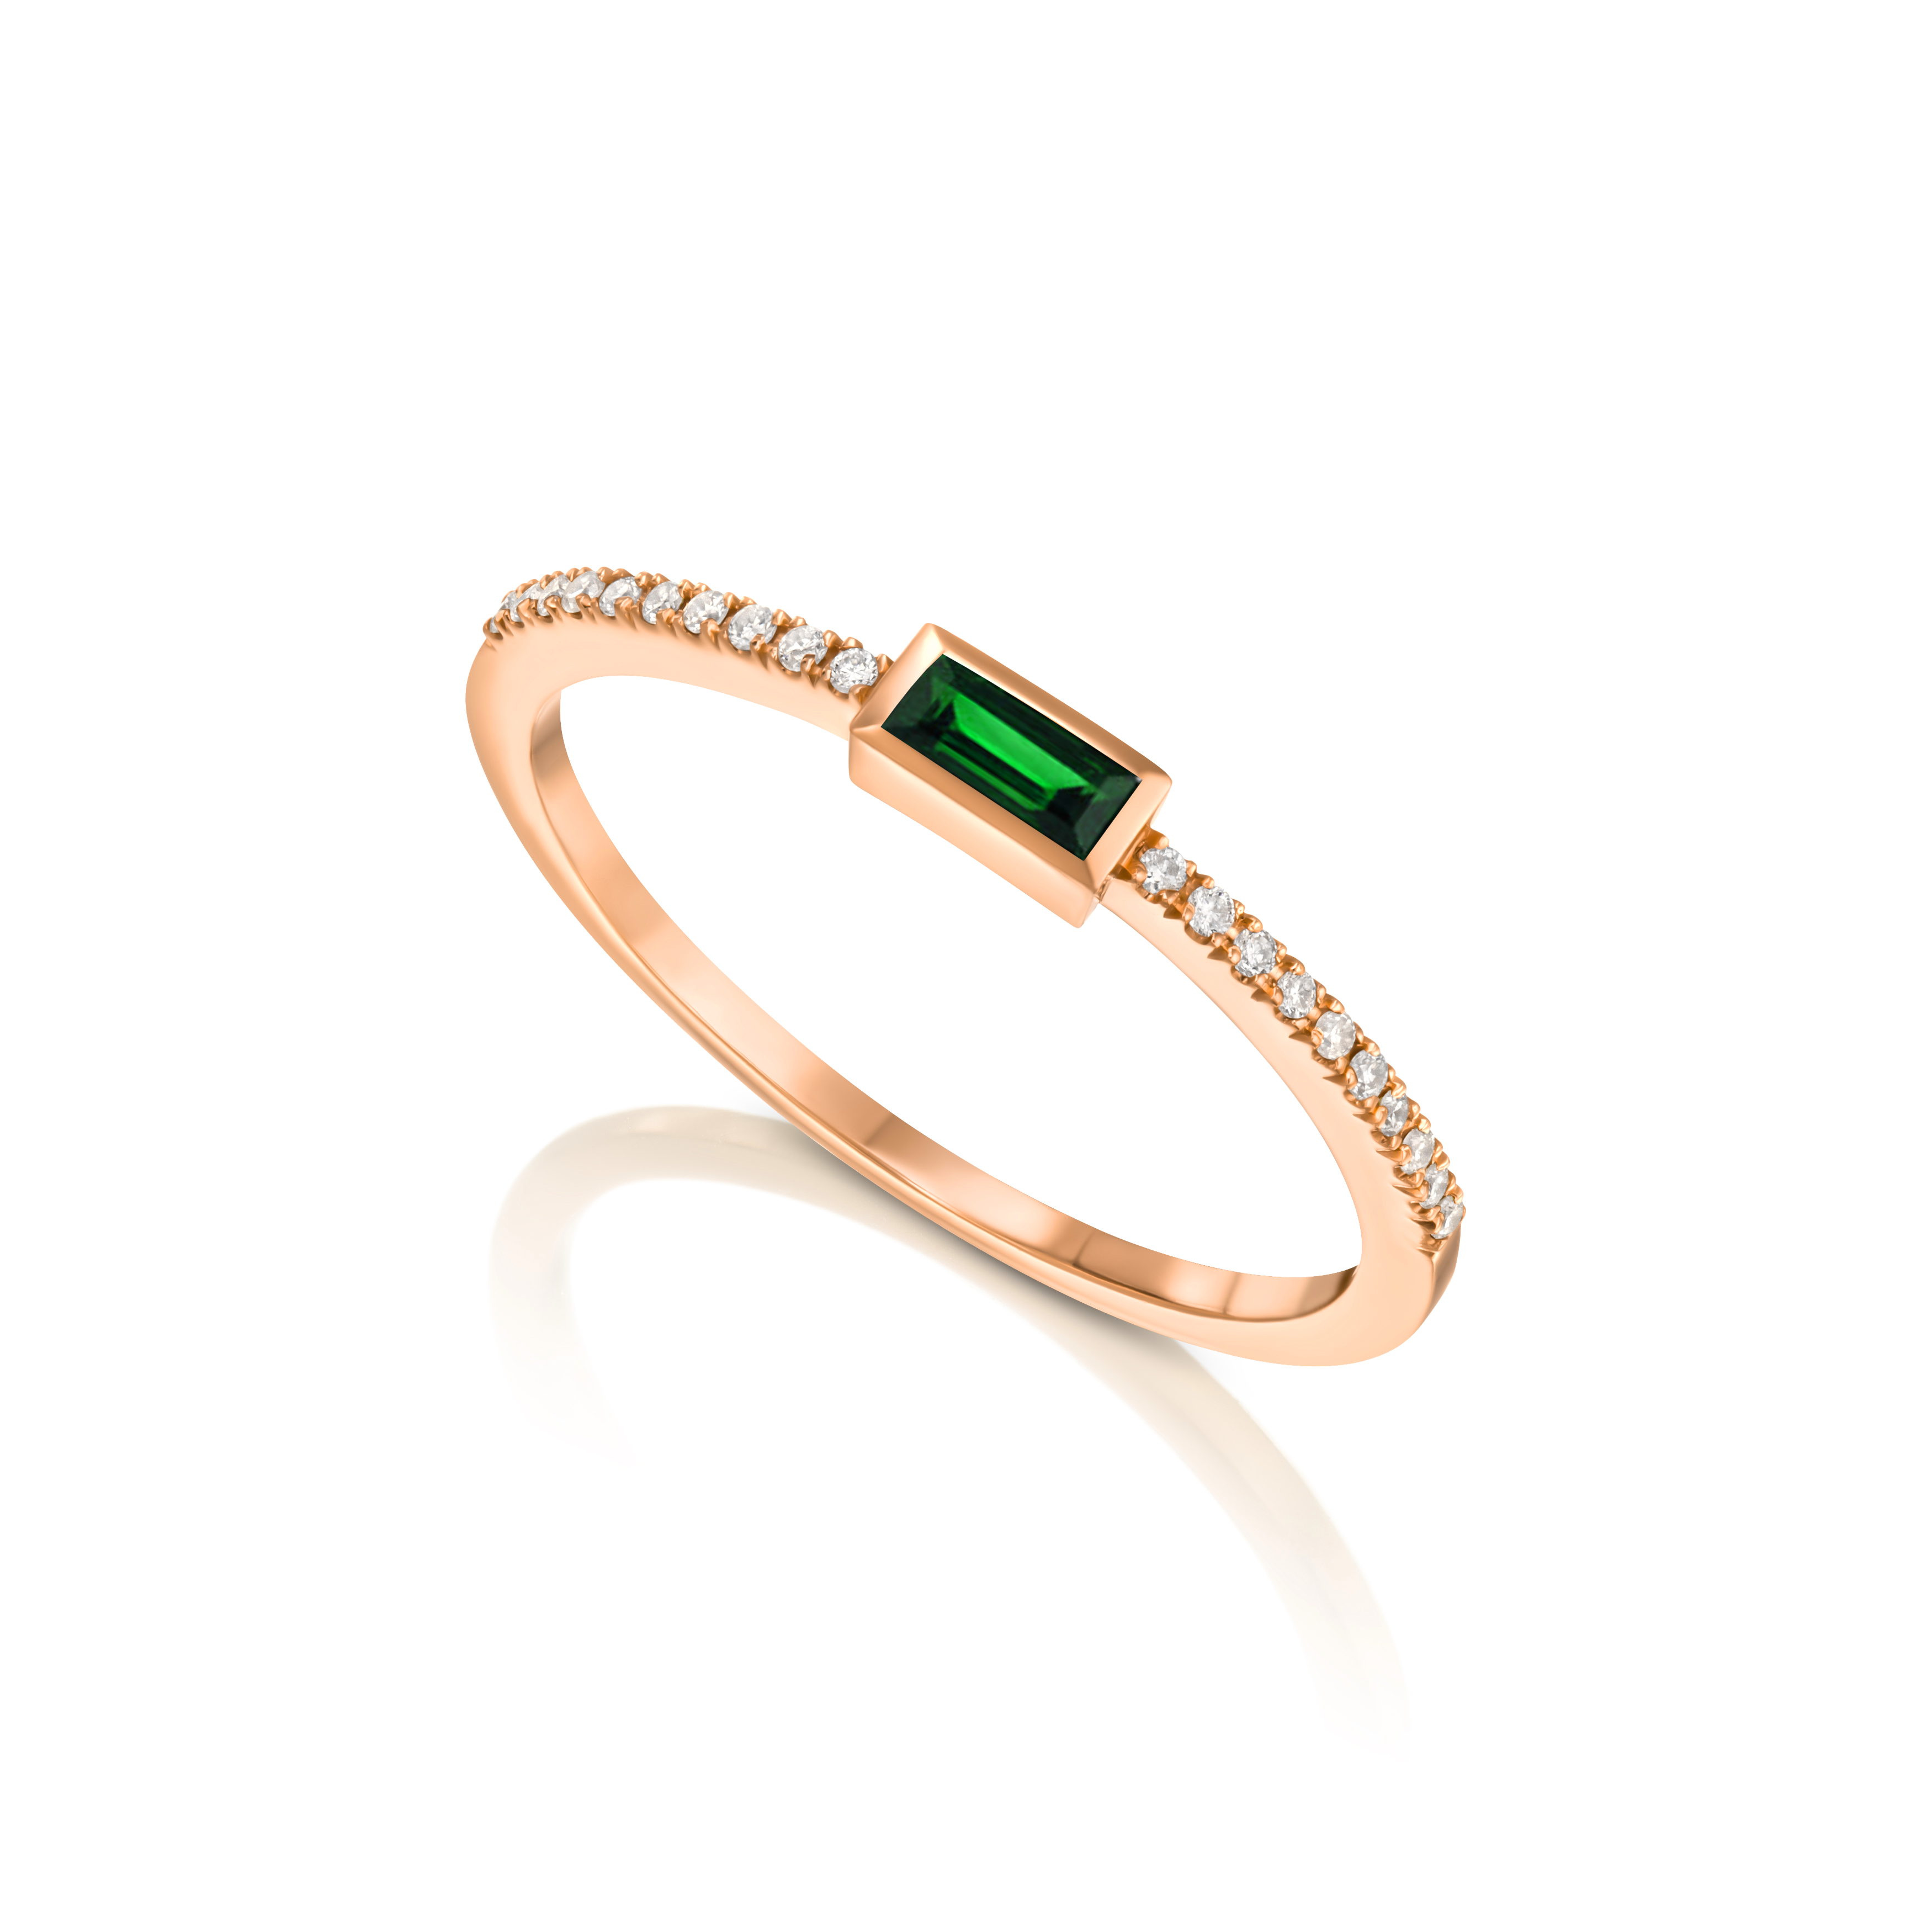 Mini emerald cut pave ring